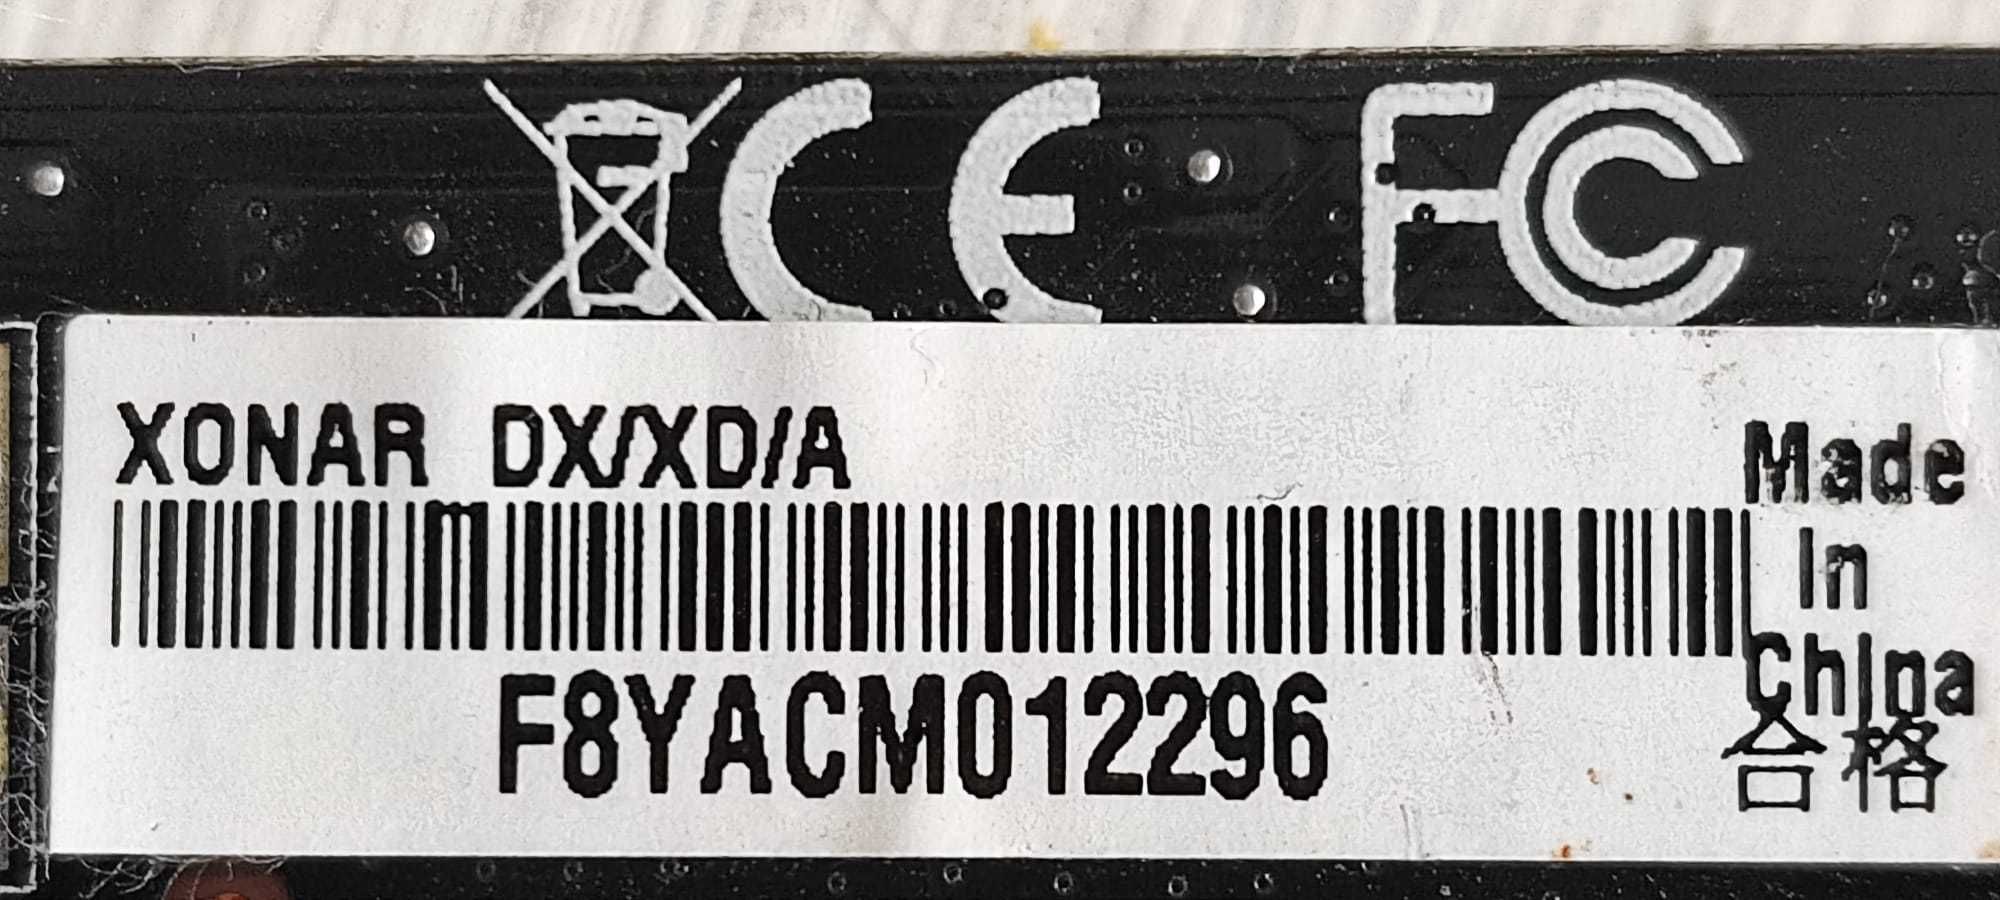 Placa sunet Creative Xonar DX/XD/A si Creative SB0770